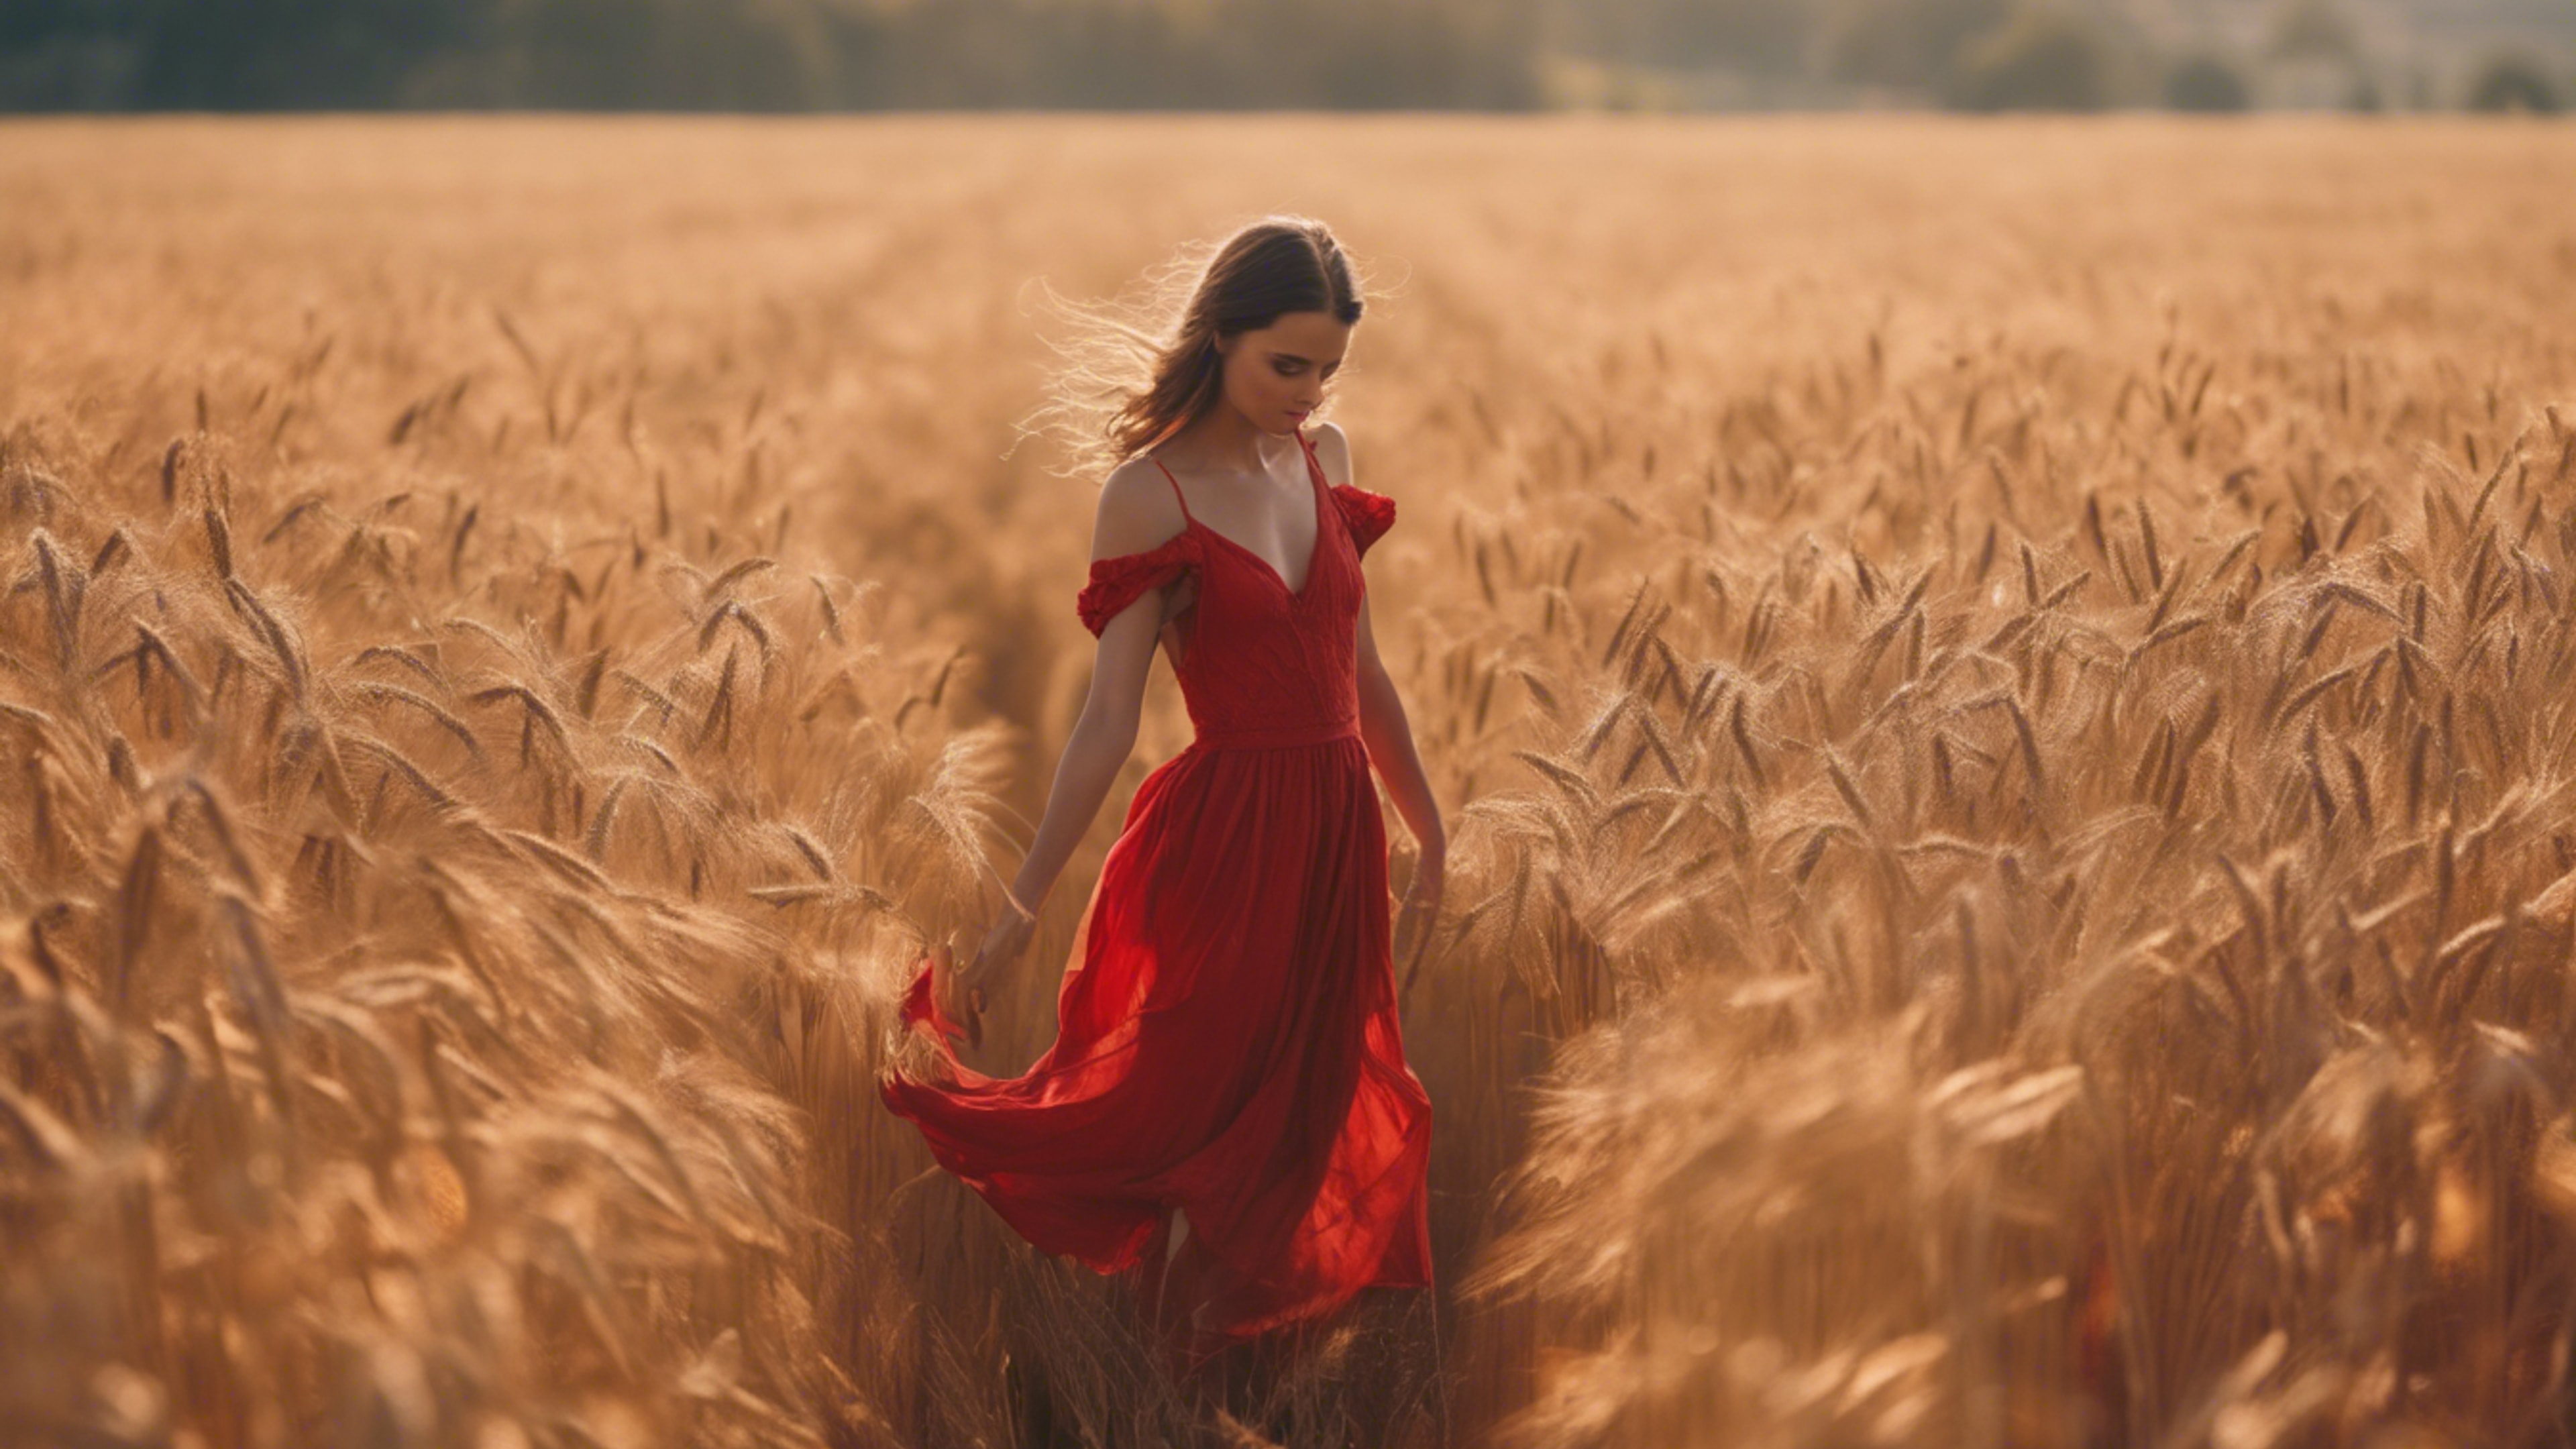 A young girl in a fiery red dress dancing in a golden wheat field. Tapeta na zeď[3d2bbc59672c41dea075]